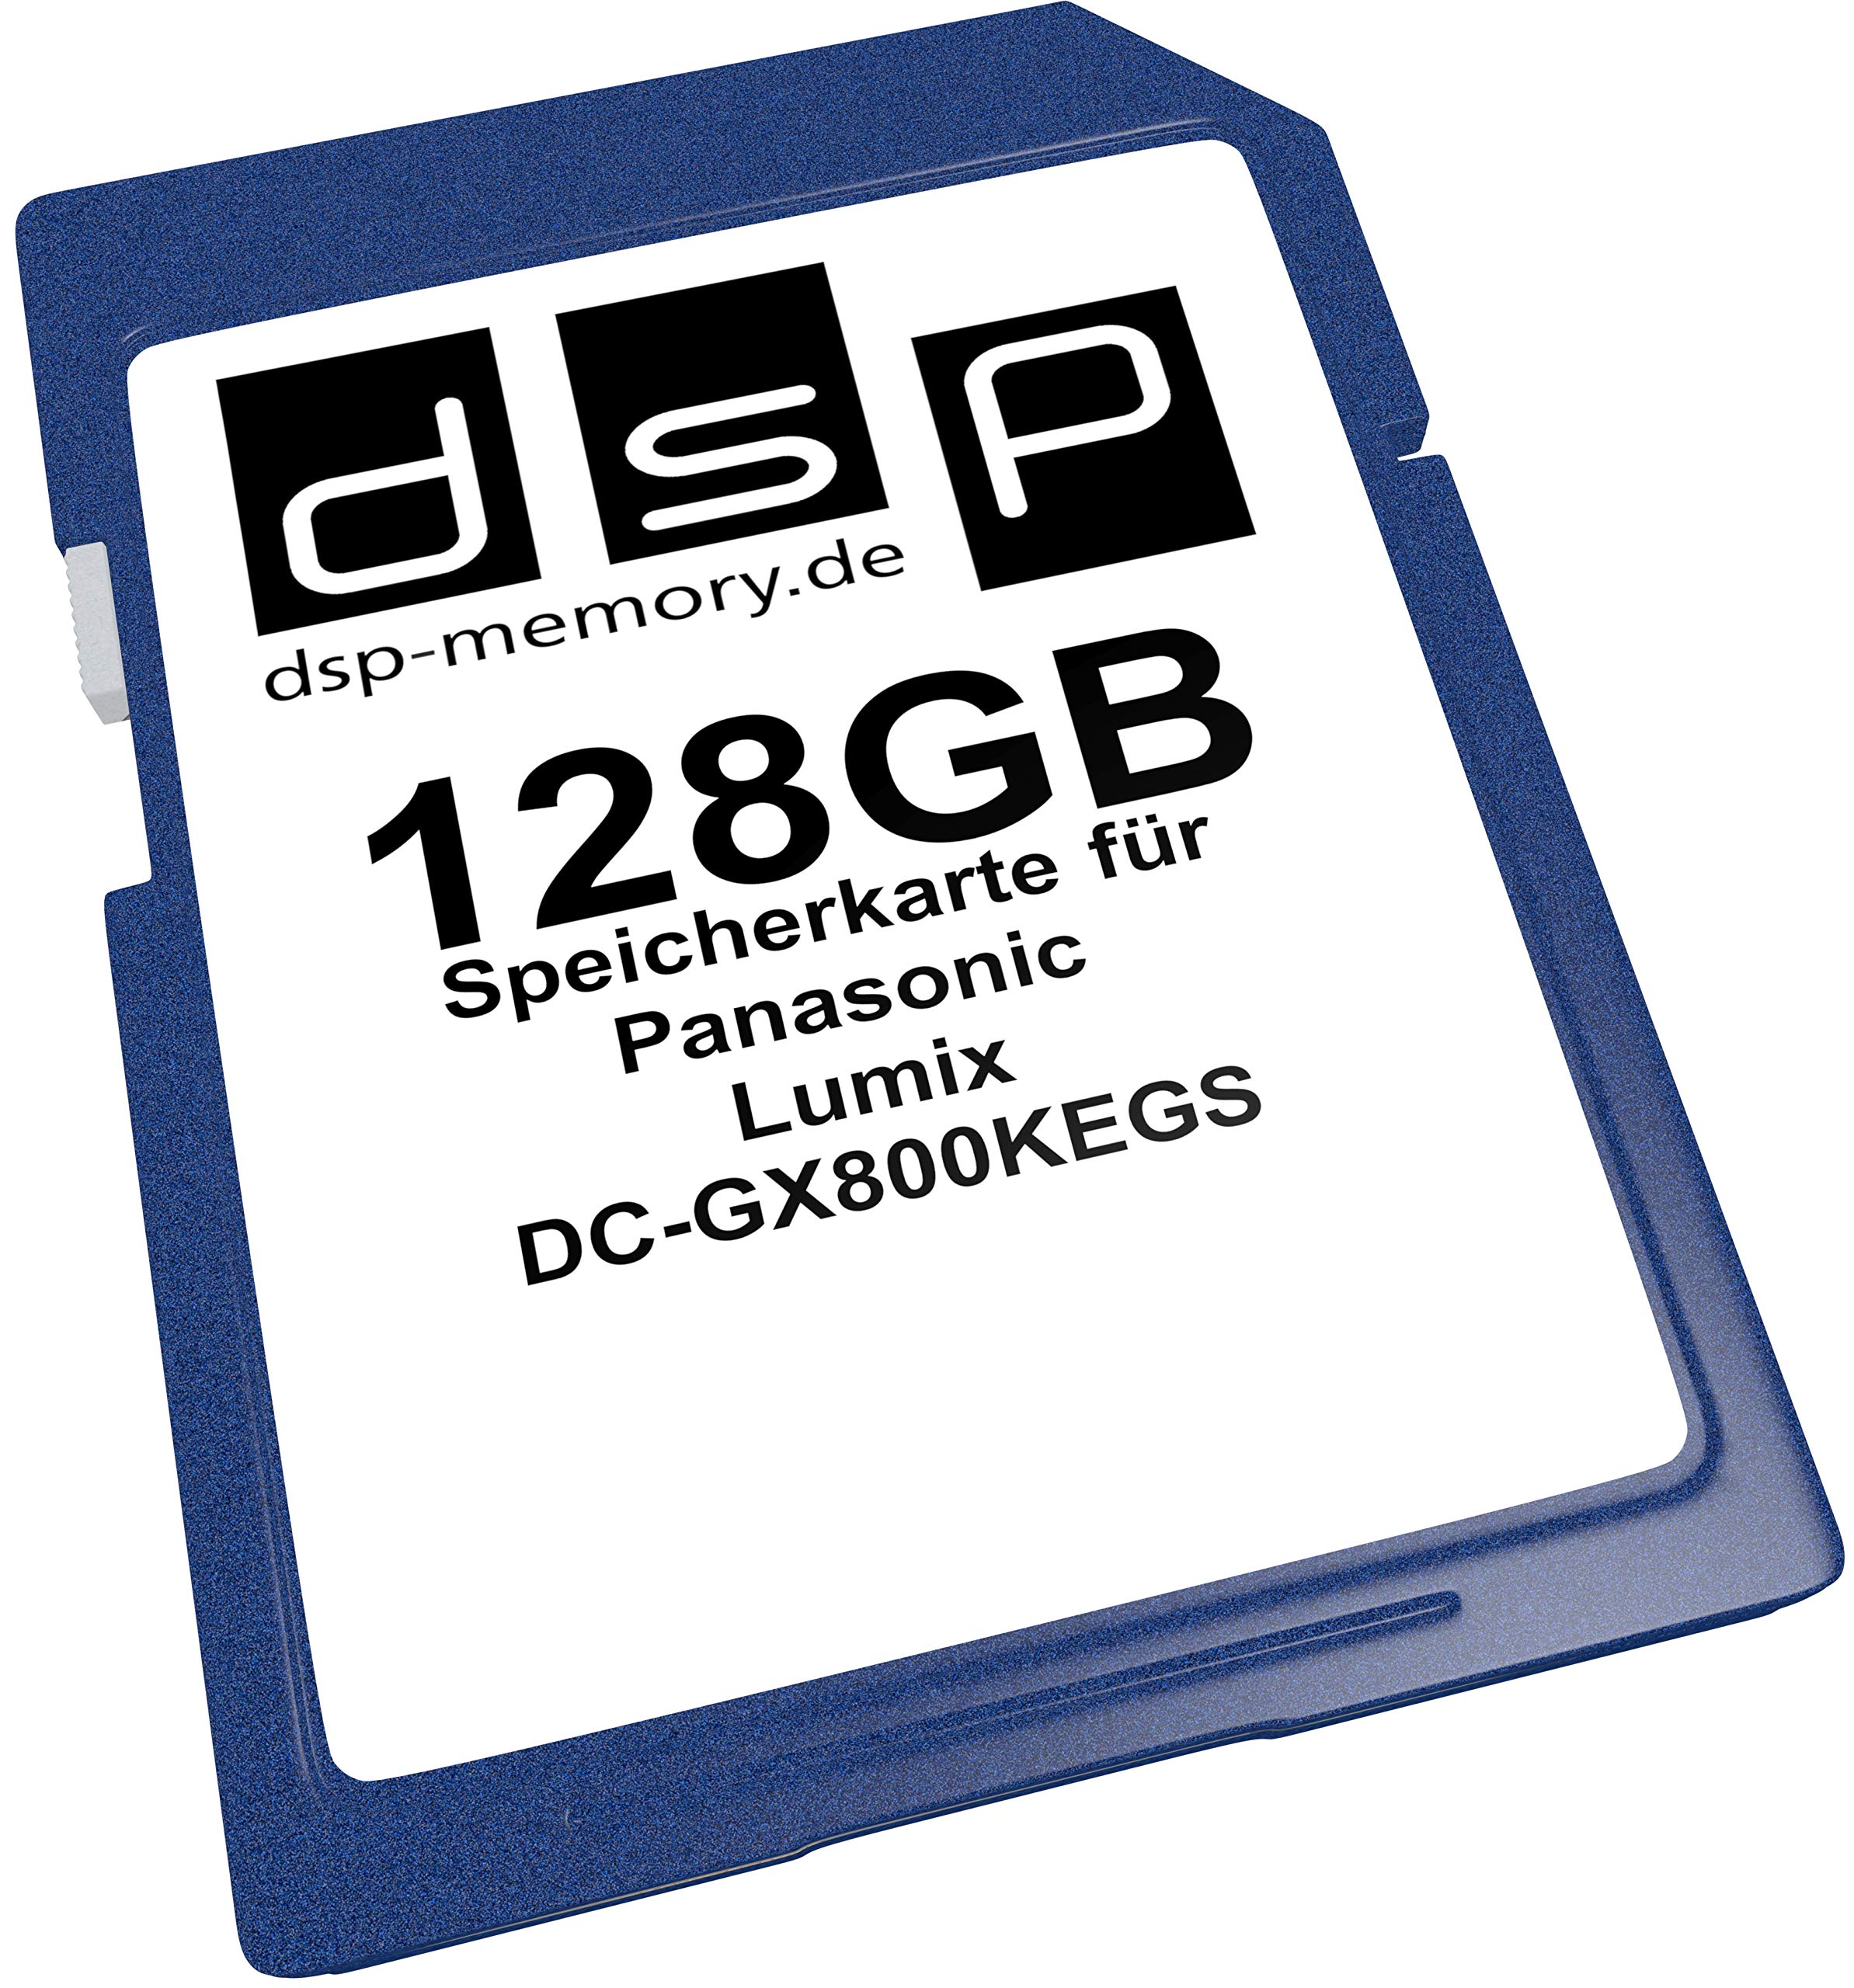 128GB Speicherkarte für Panasonic Lumix DC-GX800KEGS Digitalkamera